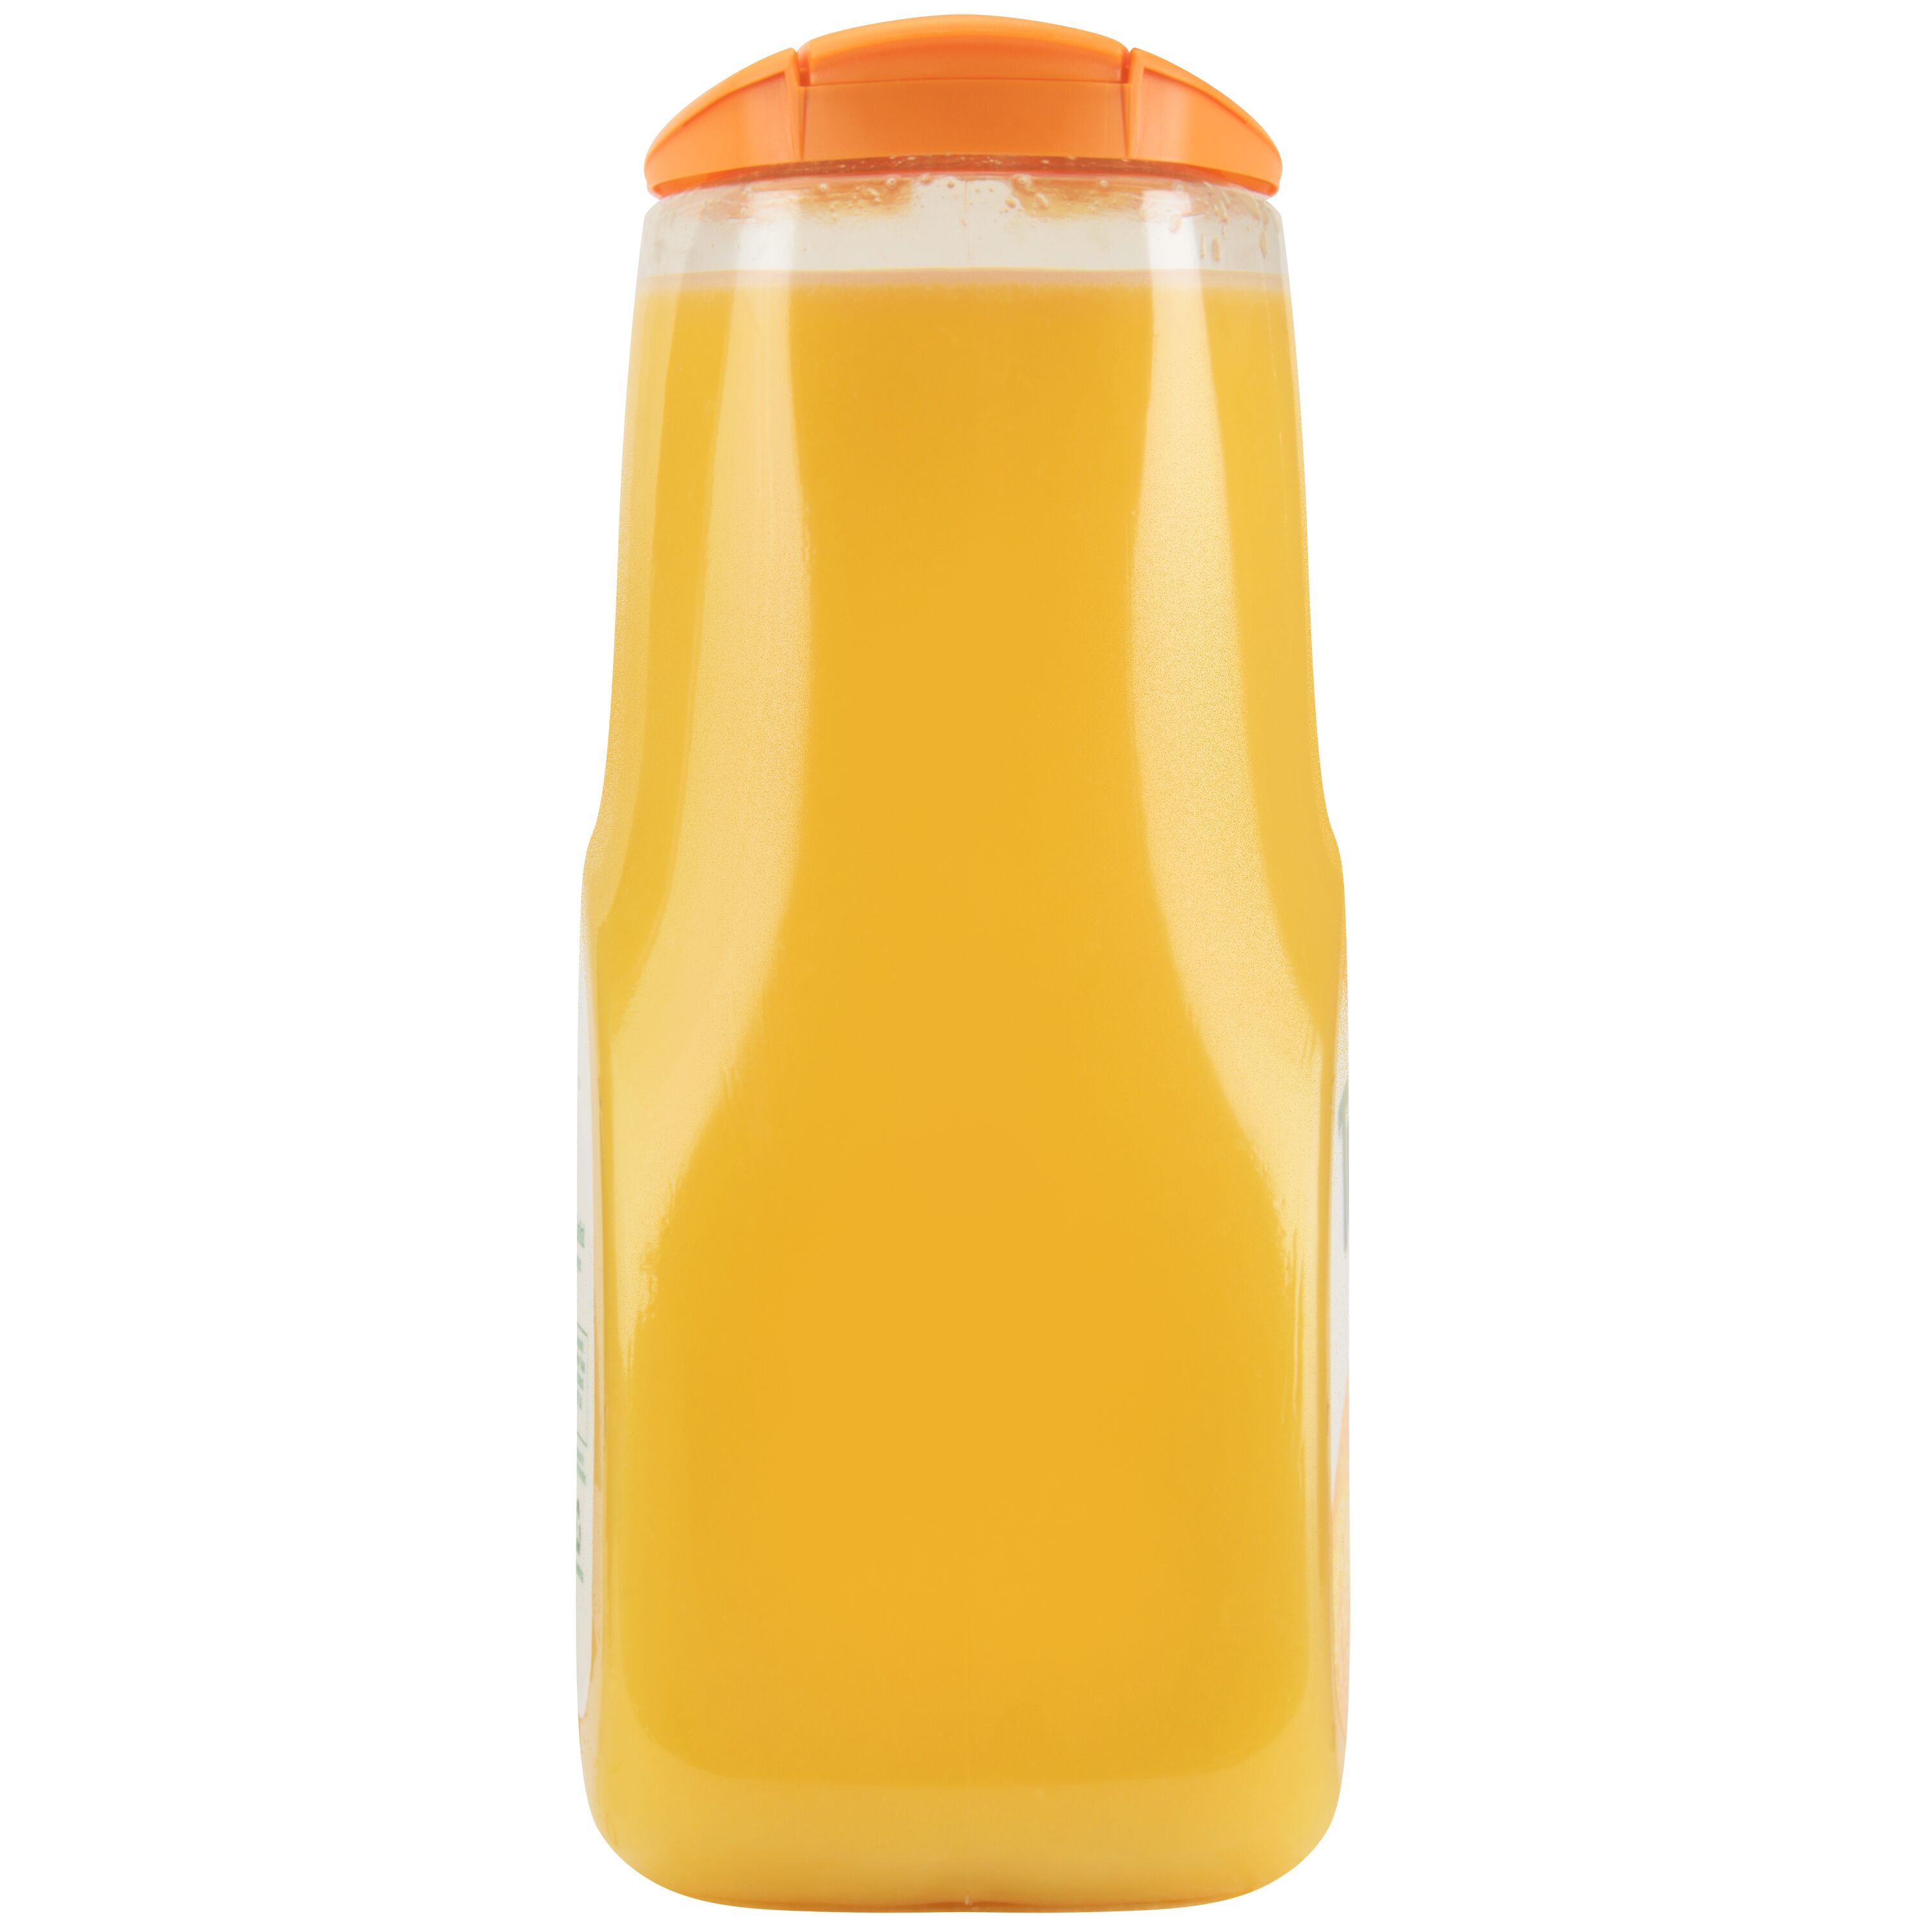 Tropicana Pure Premium, Homestyle Some Pulp 100% Orange Juice Drink, 89 fl oz Jug - image 3 of 8